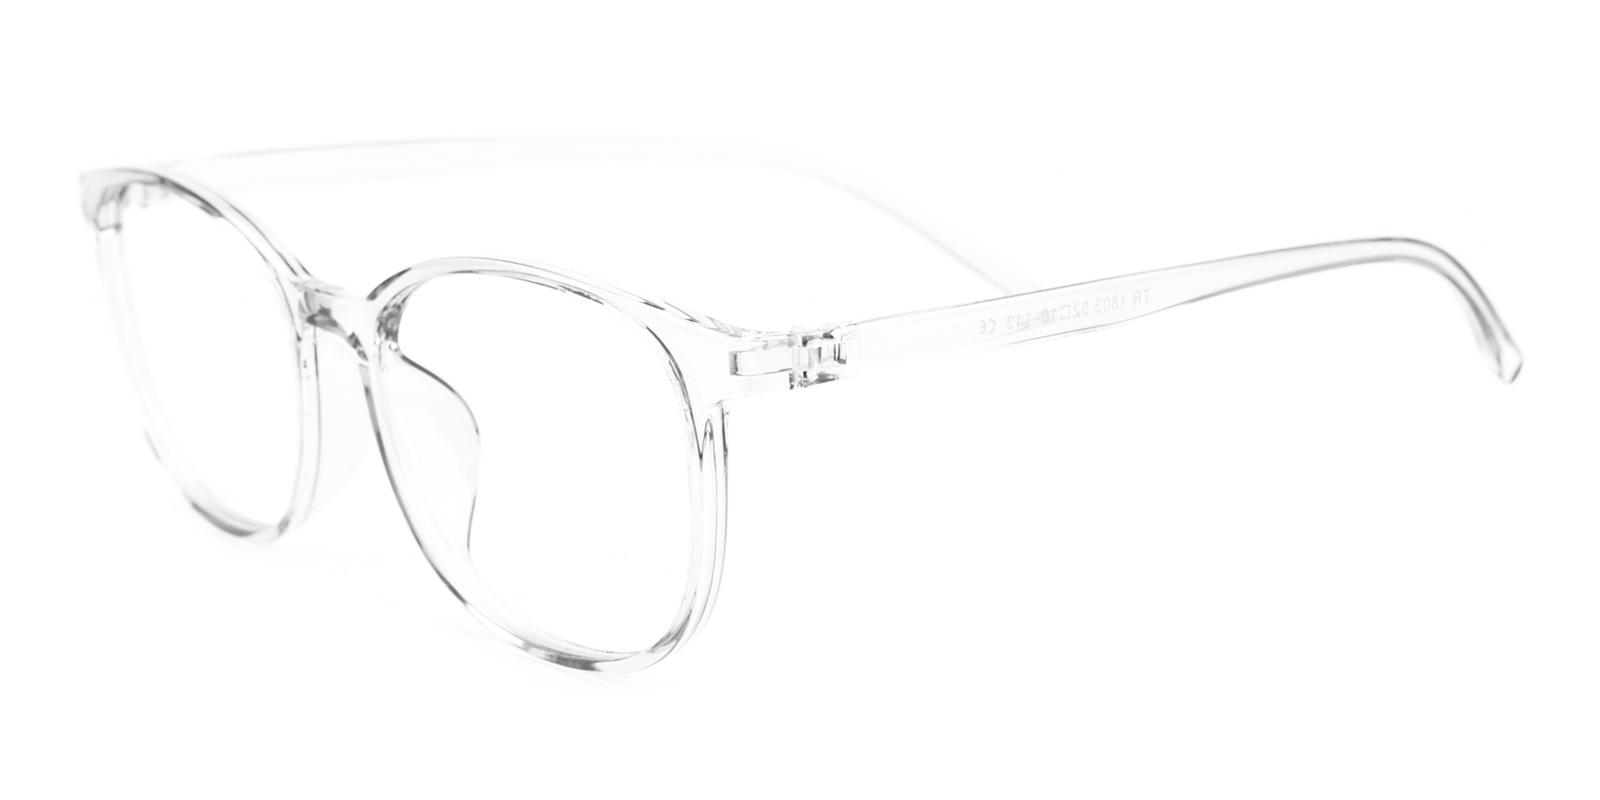 Geoff-Translucent-Cat-TR-Eyeglasses-detail